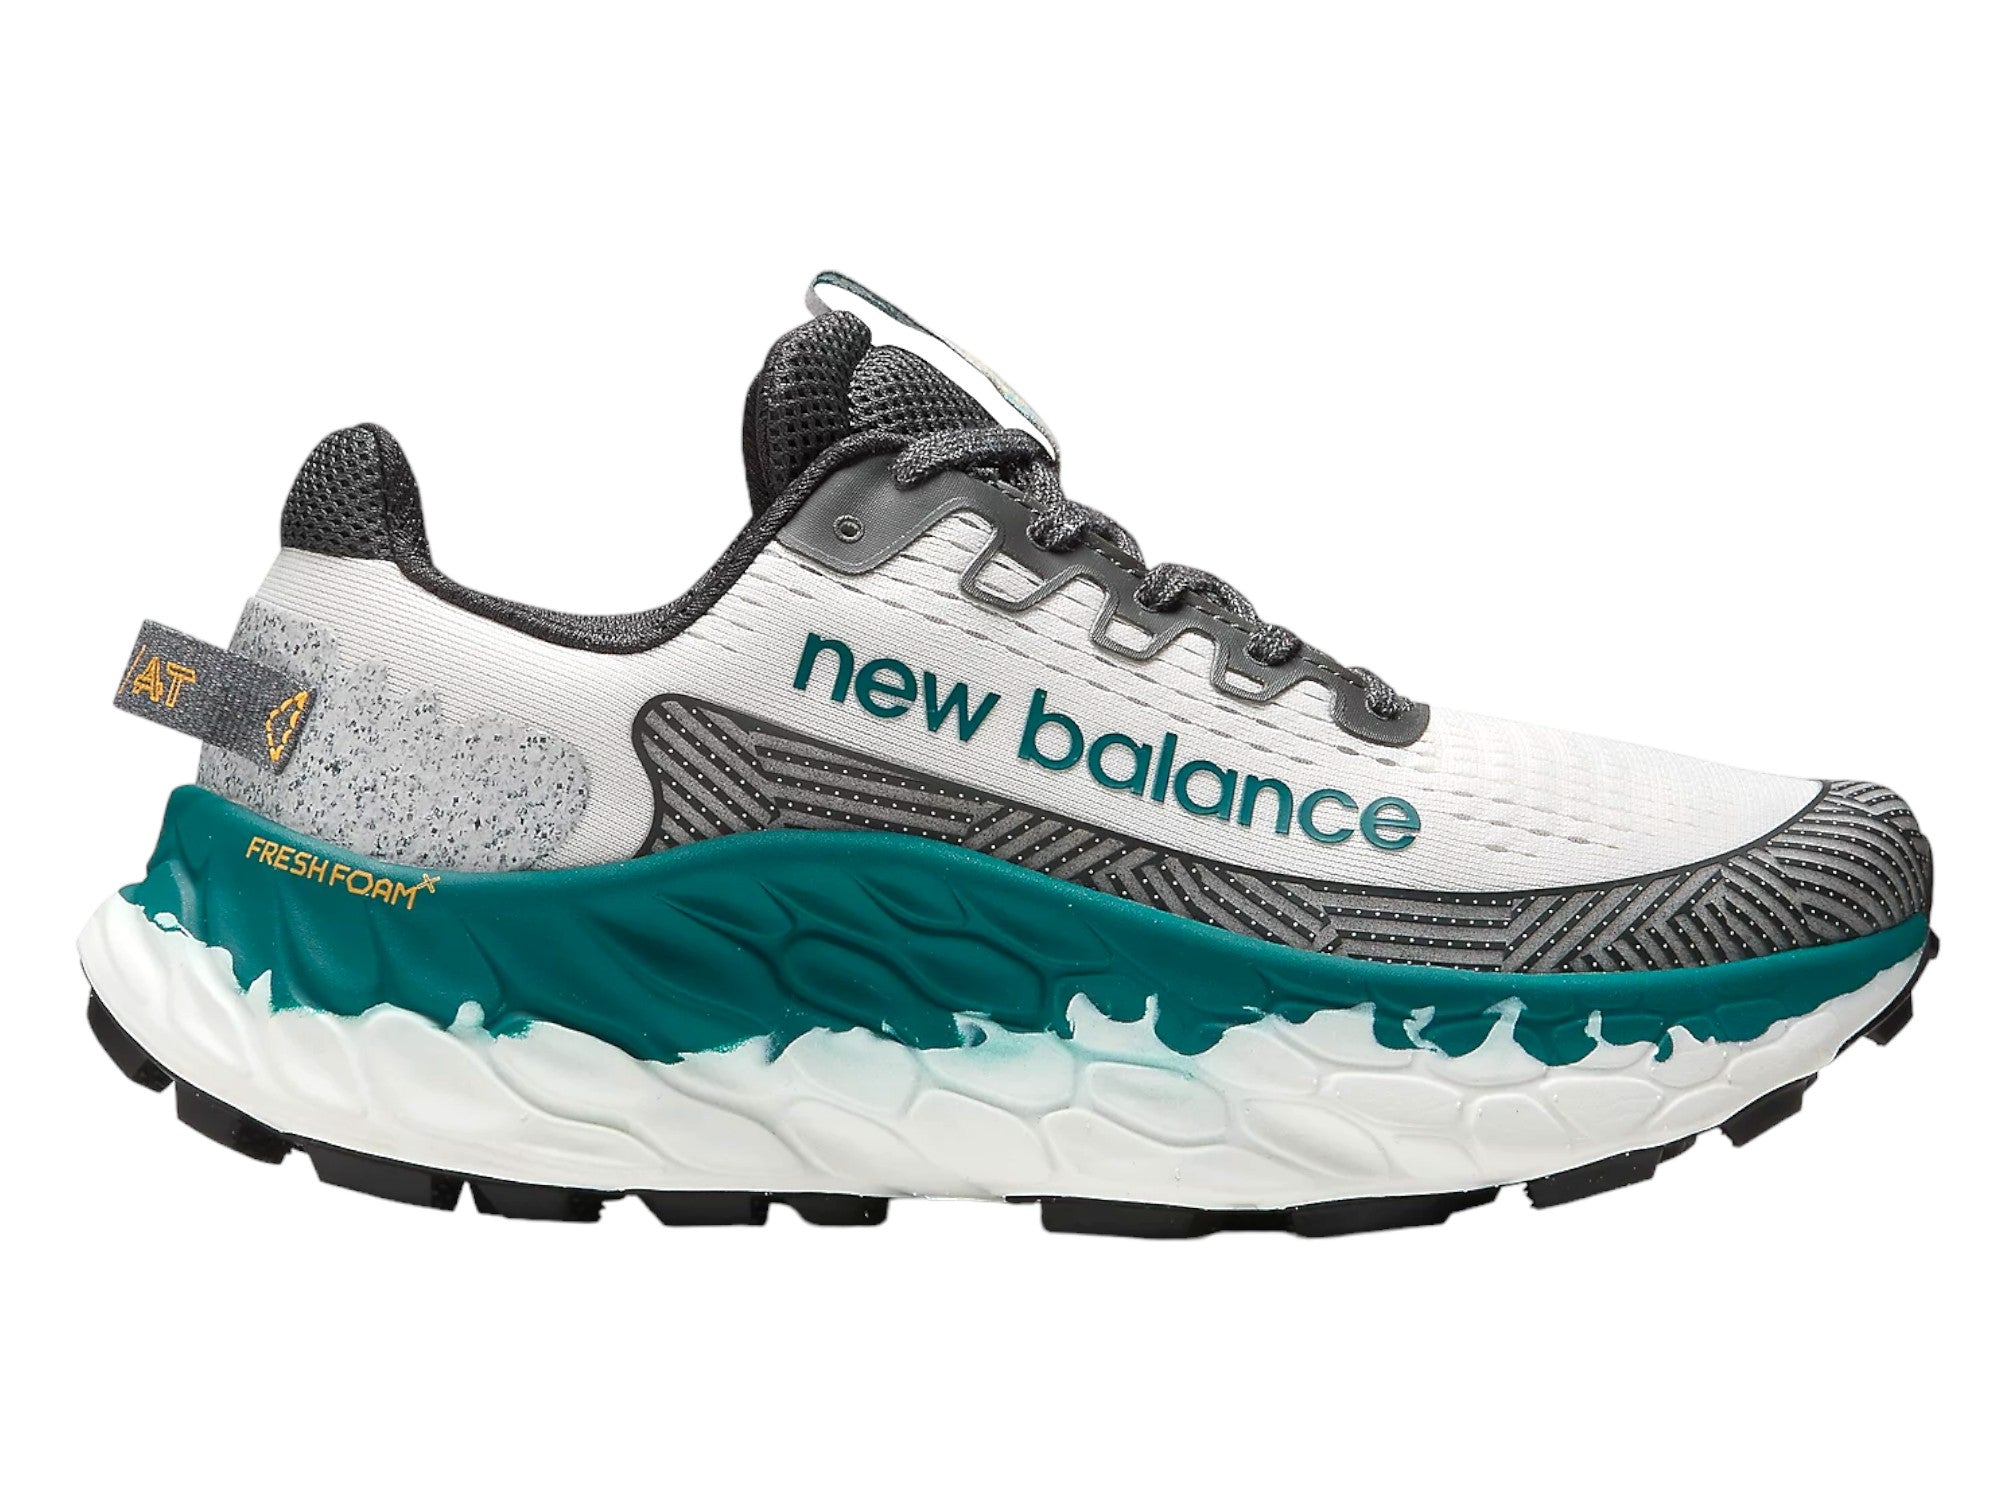 New Balance FF X Trail More v3 Sneaker - Men's